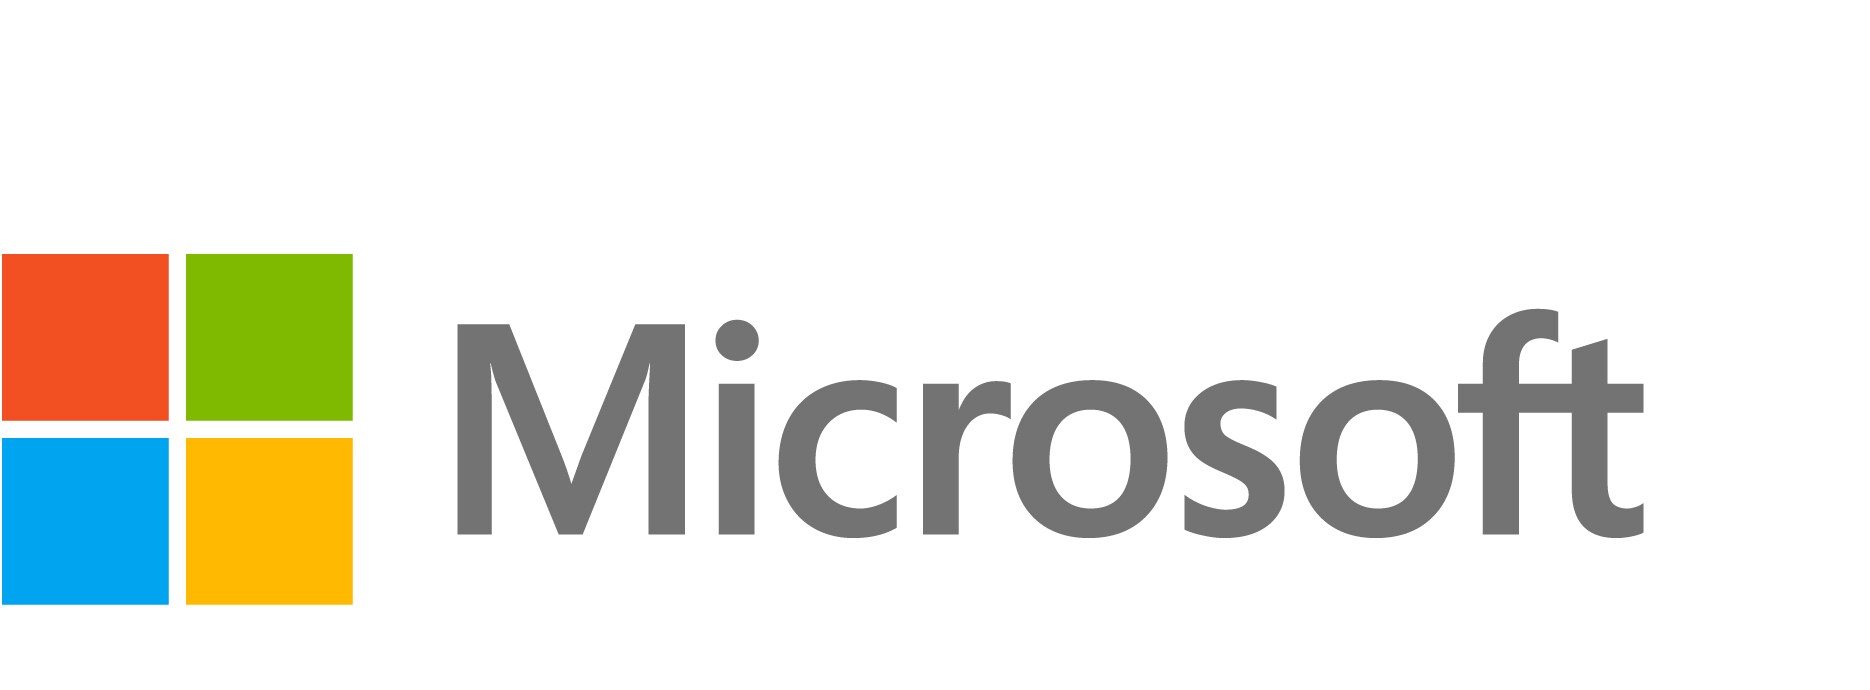 Microsoft Defender for Endpoint Plan 2 - subscription license - 1 user